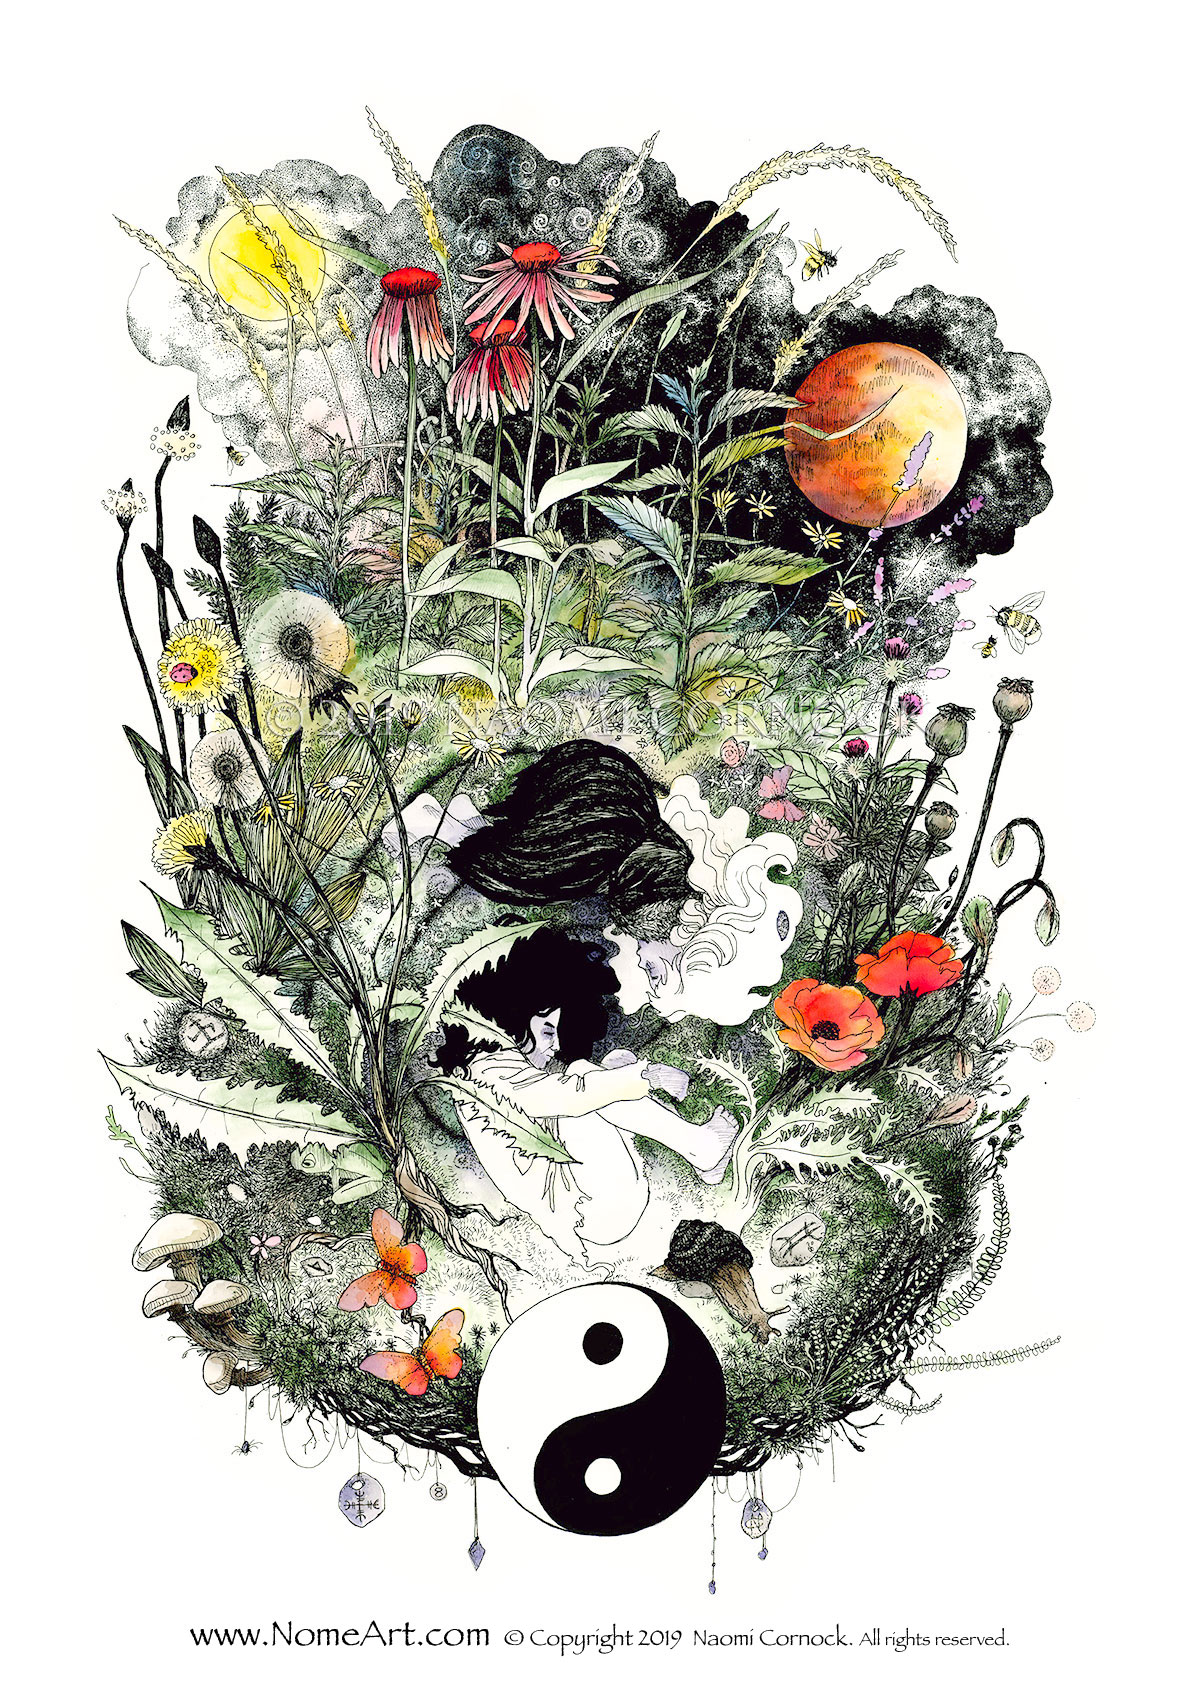 Healing Herbs by Naomi Cornock